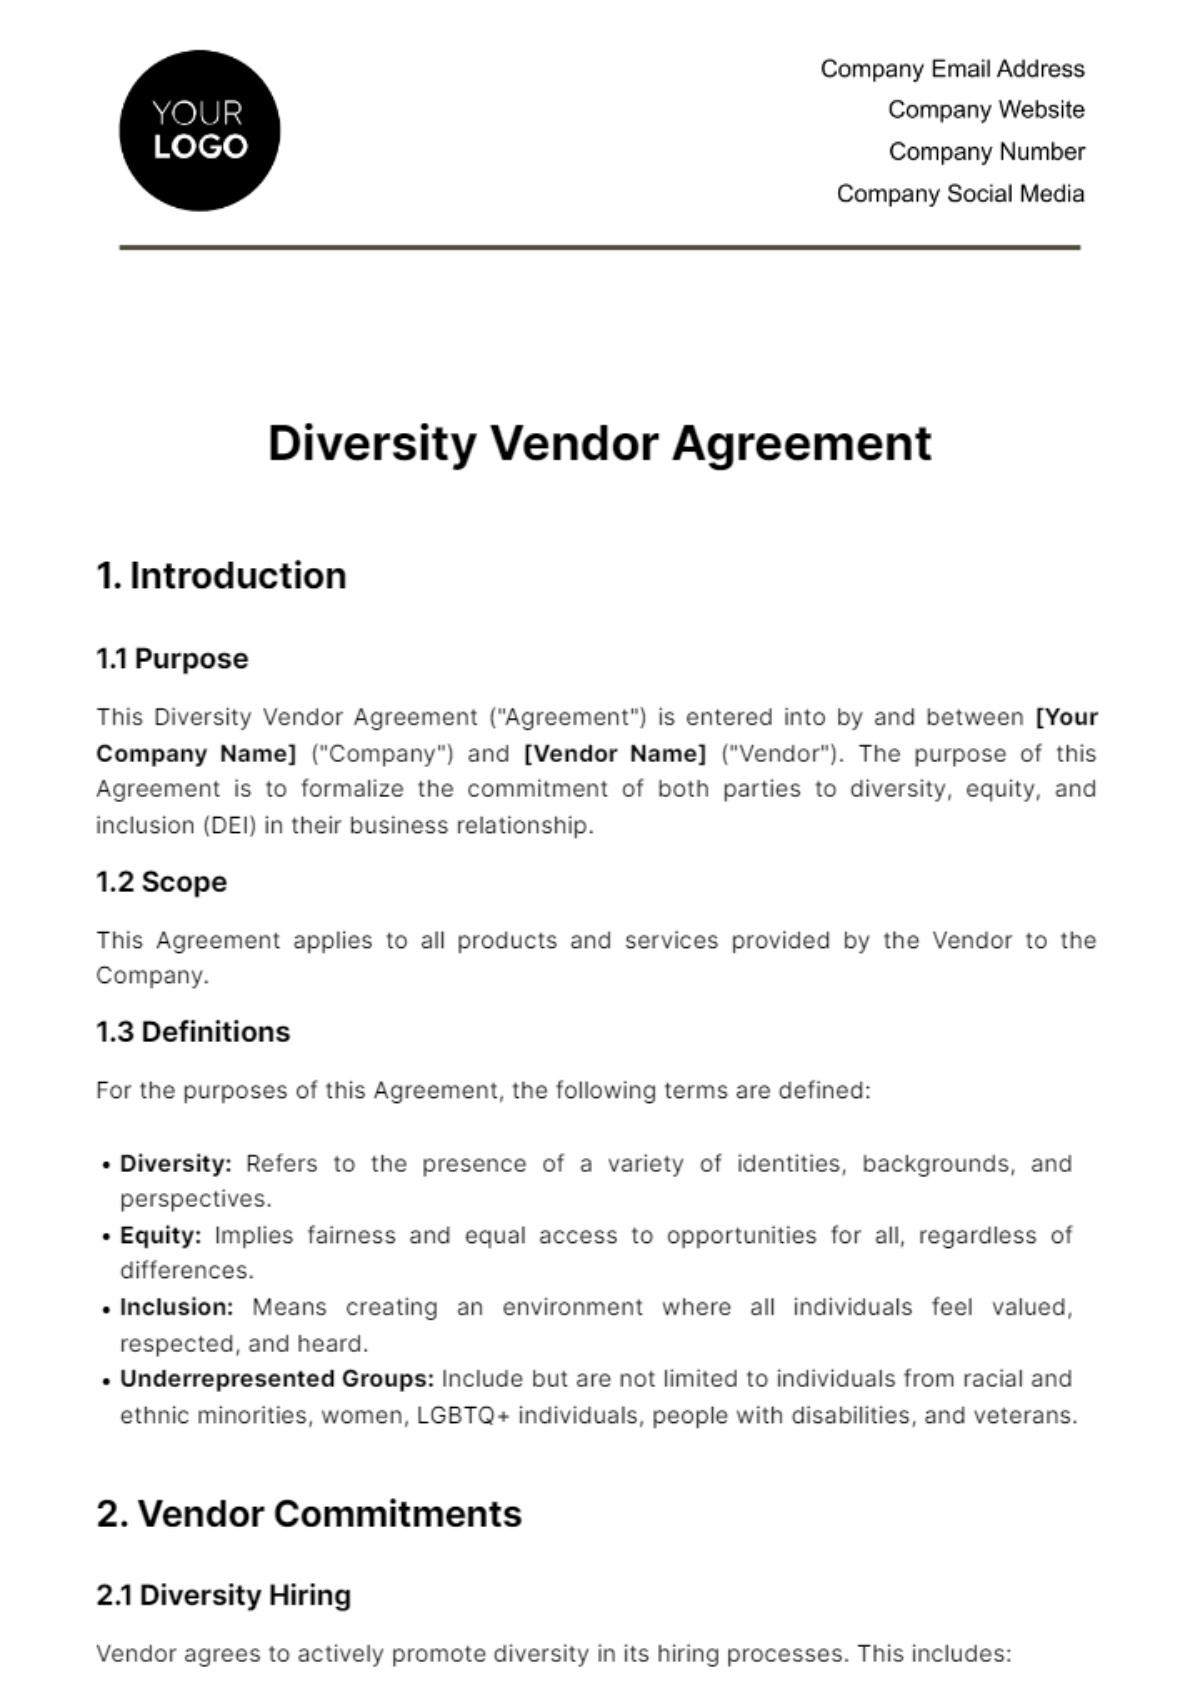 Free Diversity Vendor Agreement HR Template